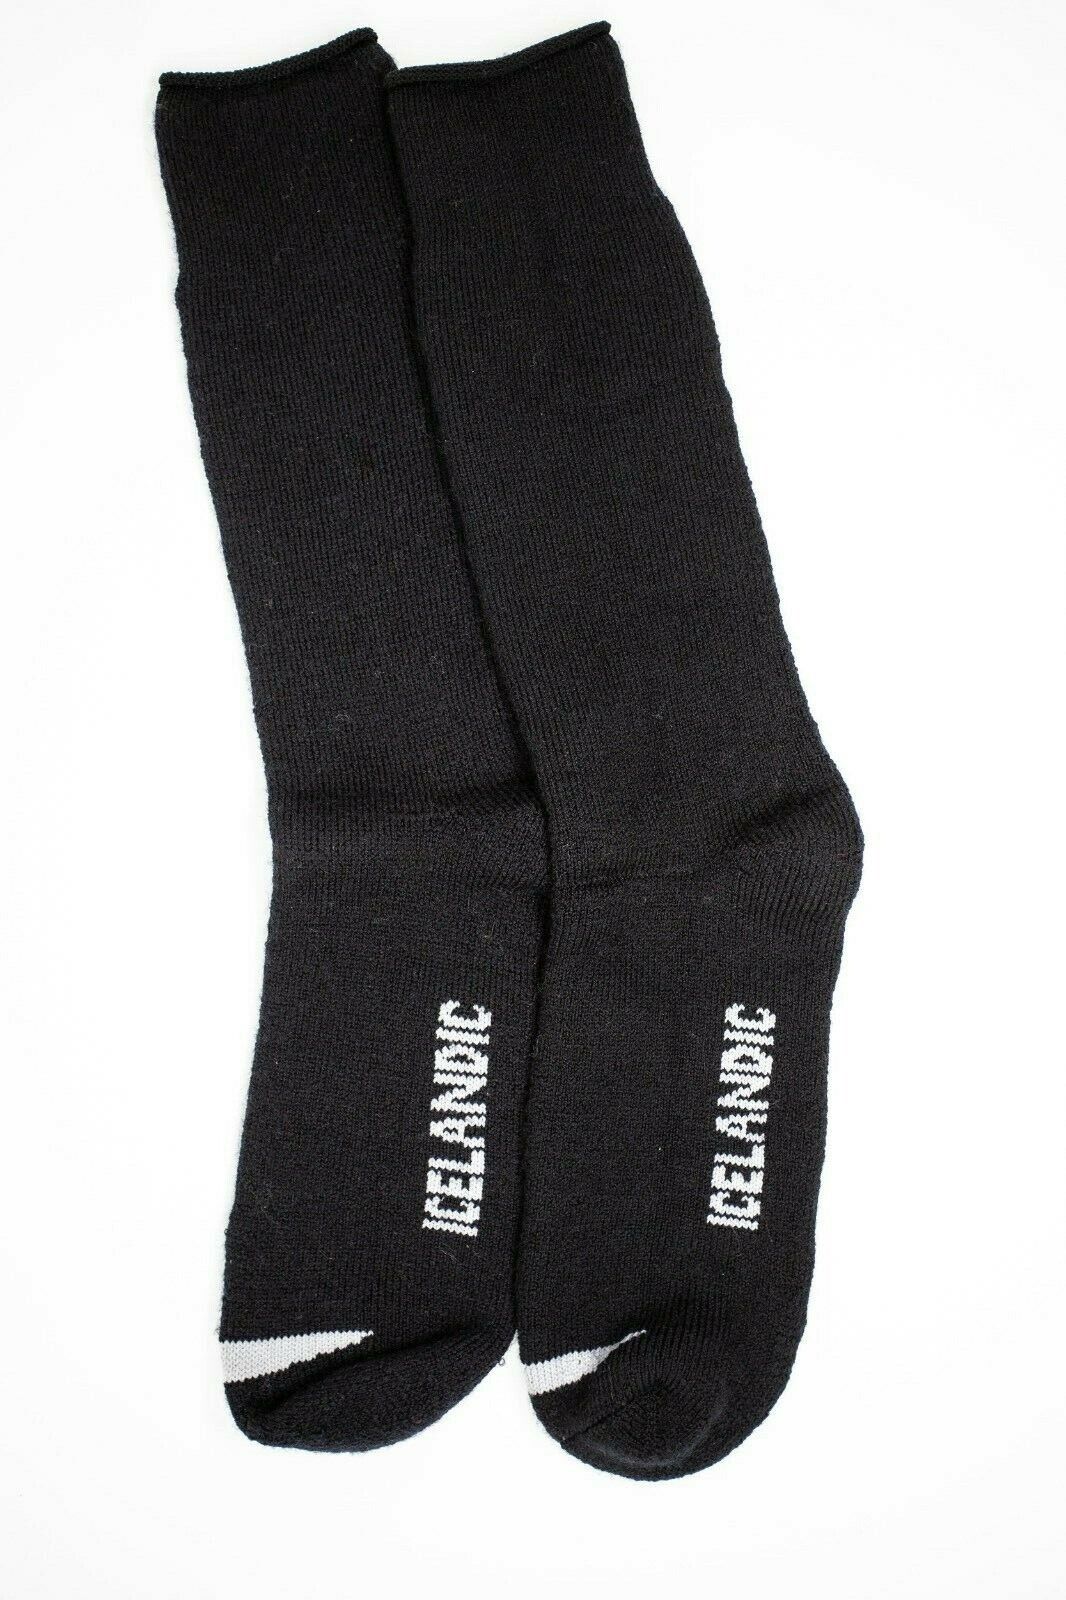 Black over-the-calf wool socks